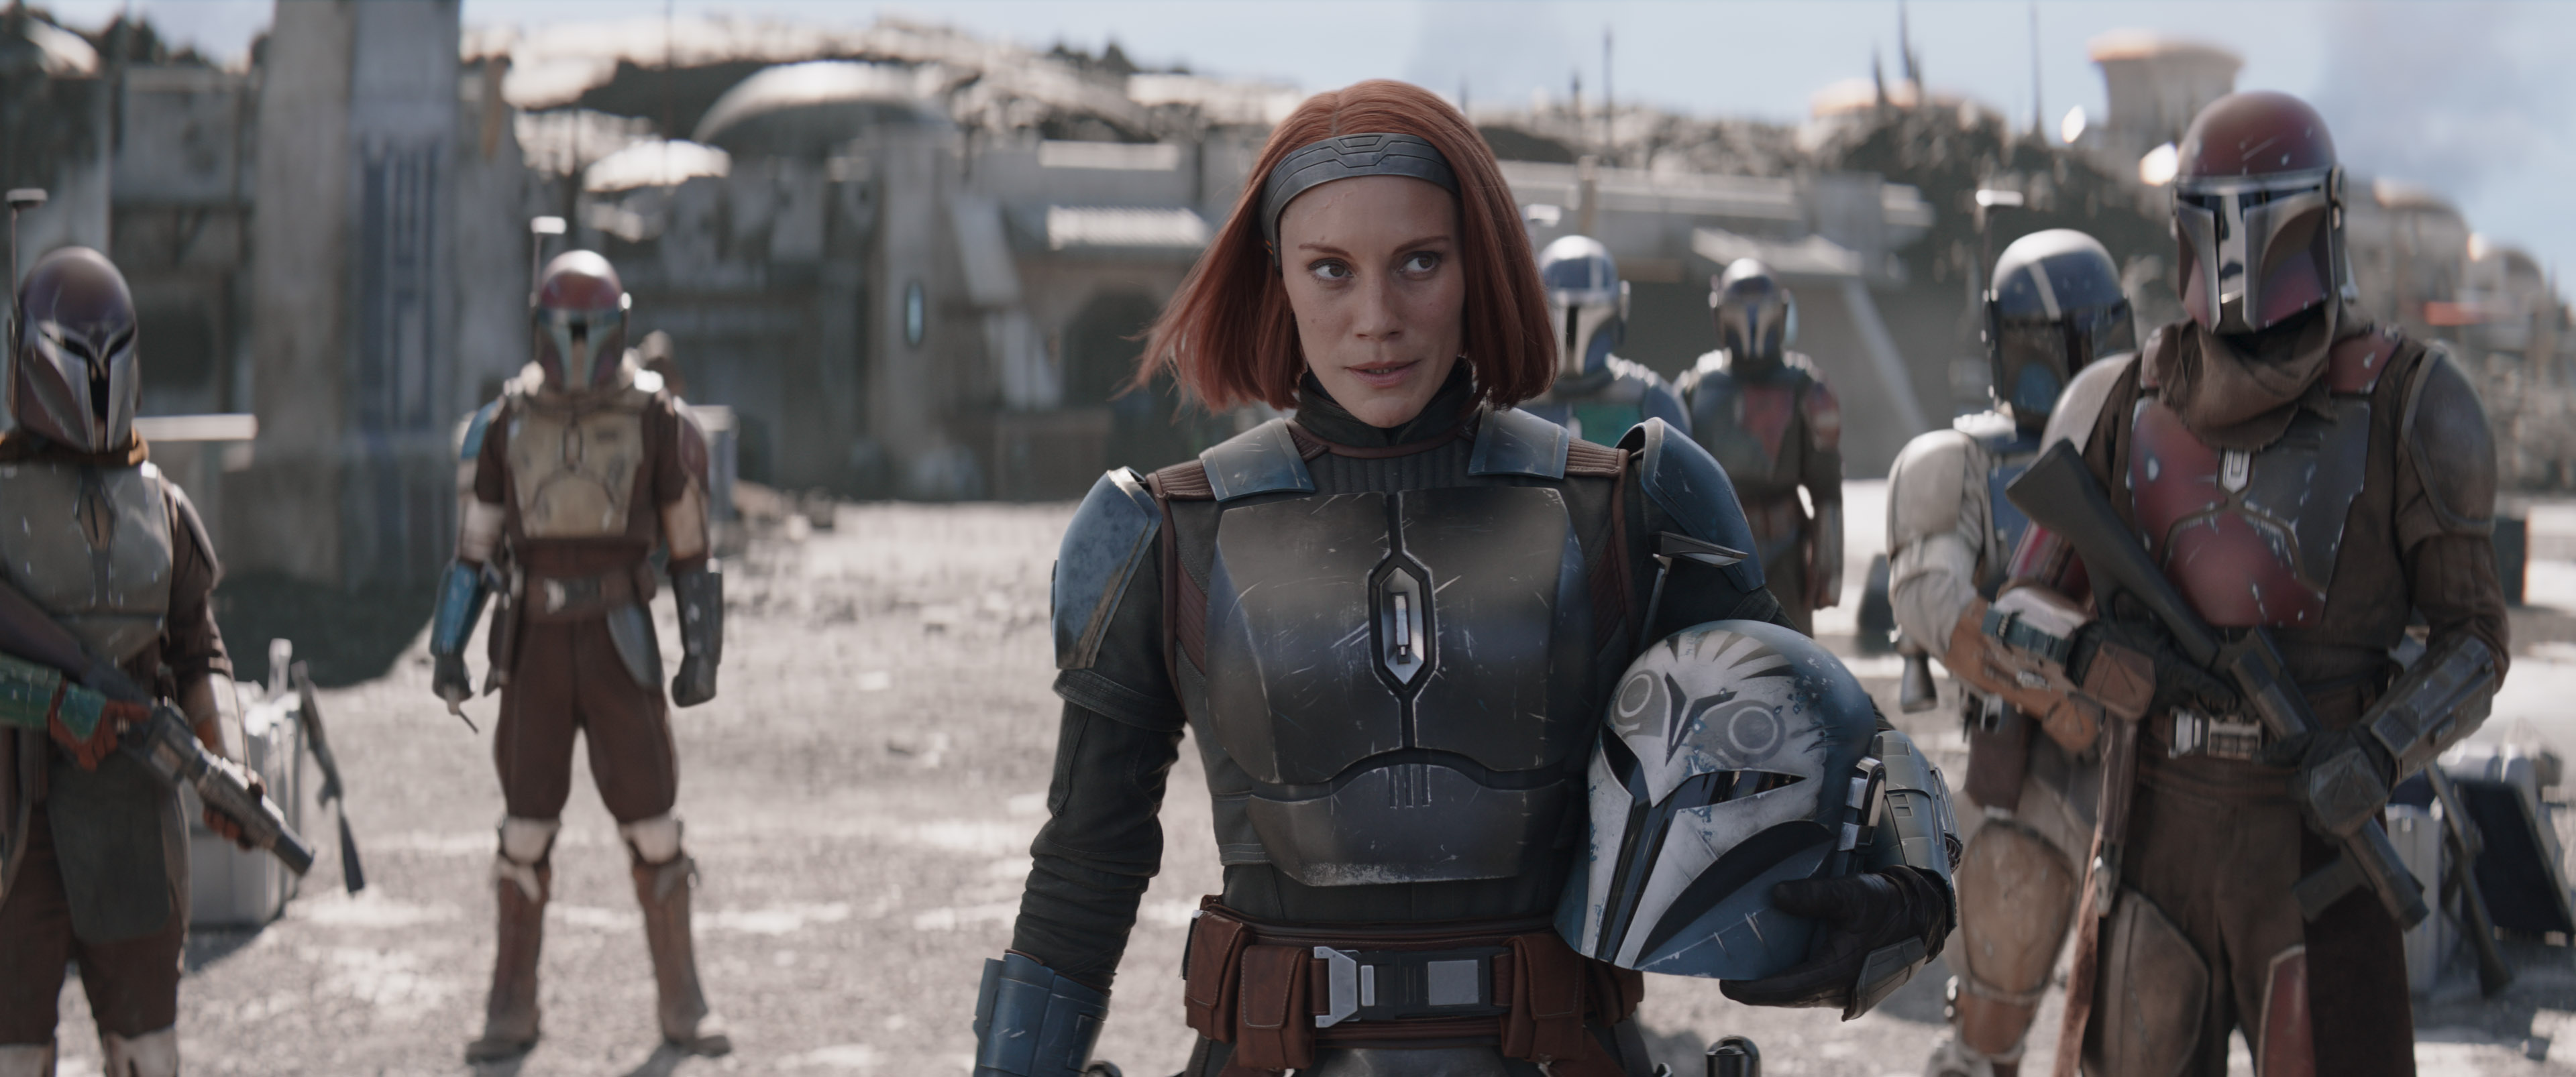 Bo-Katan stands with her helmet off amidst her fellow Mandalorians in season 3 of The Mandalorian.